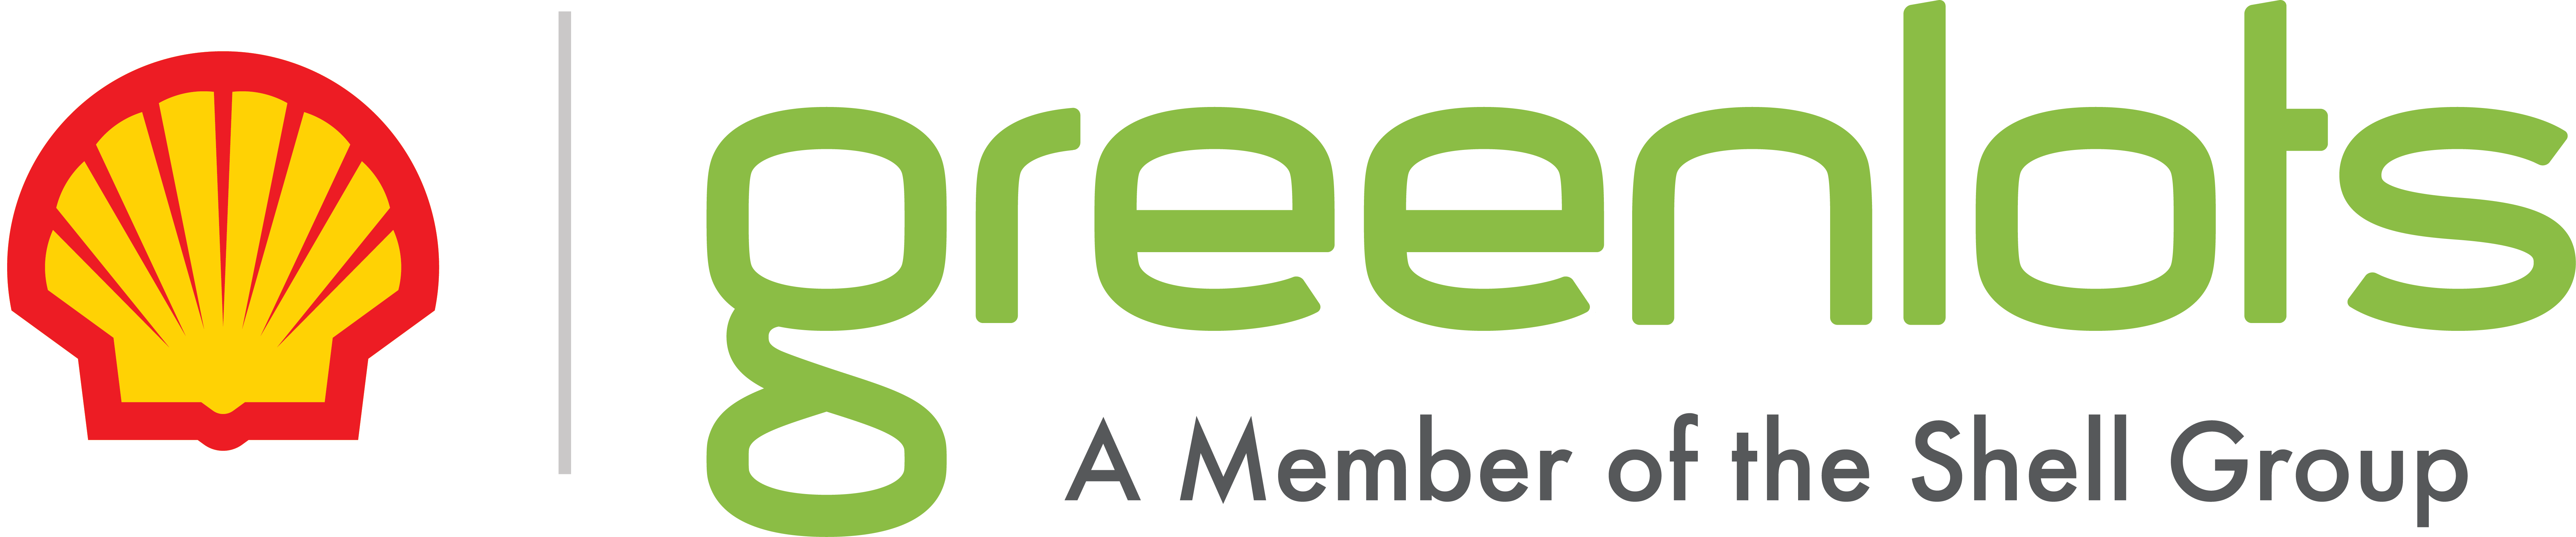 Greenlots_Co-Brand-Logo-HiRes